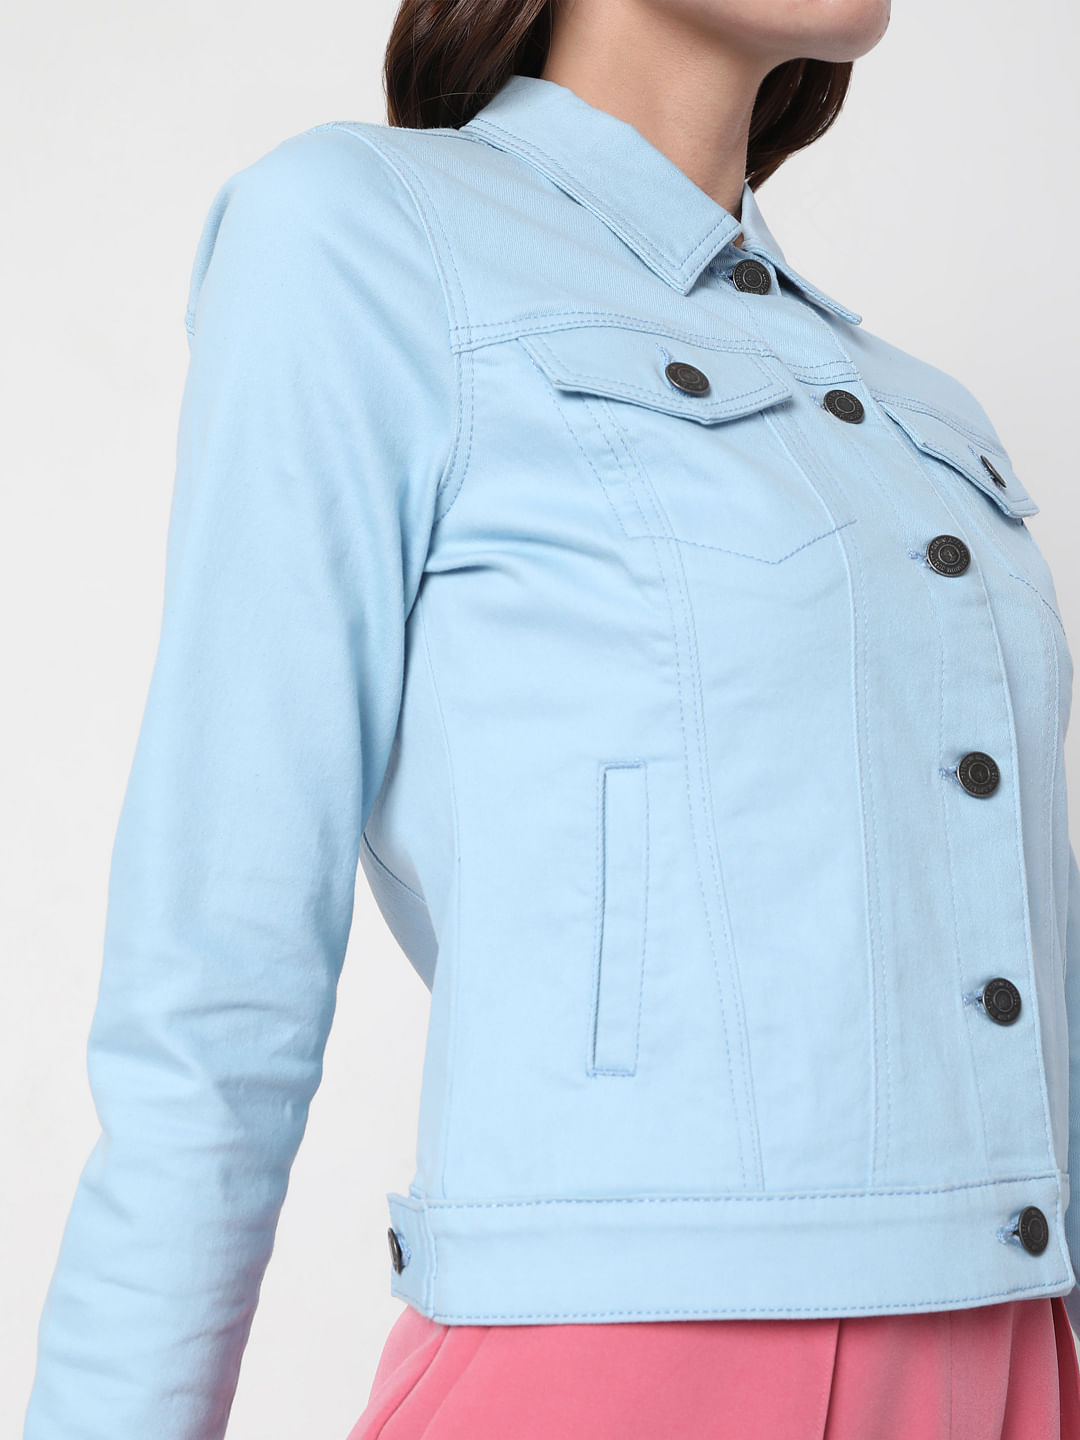 Vero Moda denim jacket in light blue wash | ASOS